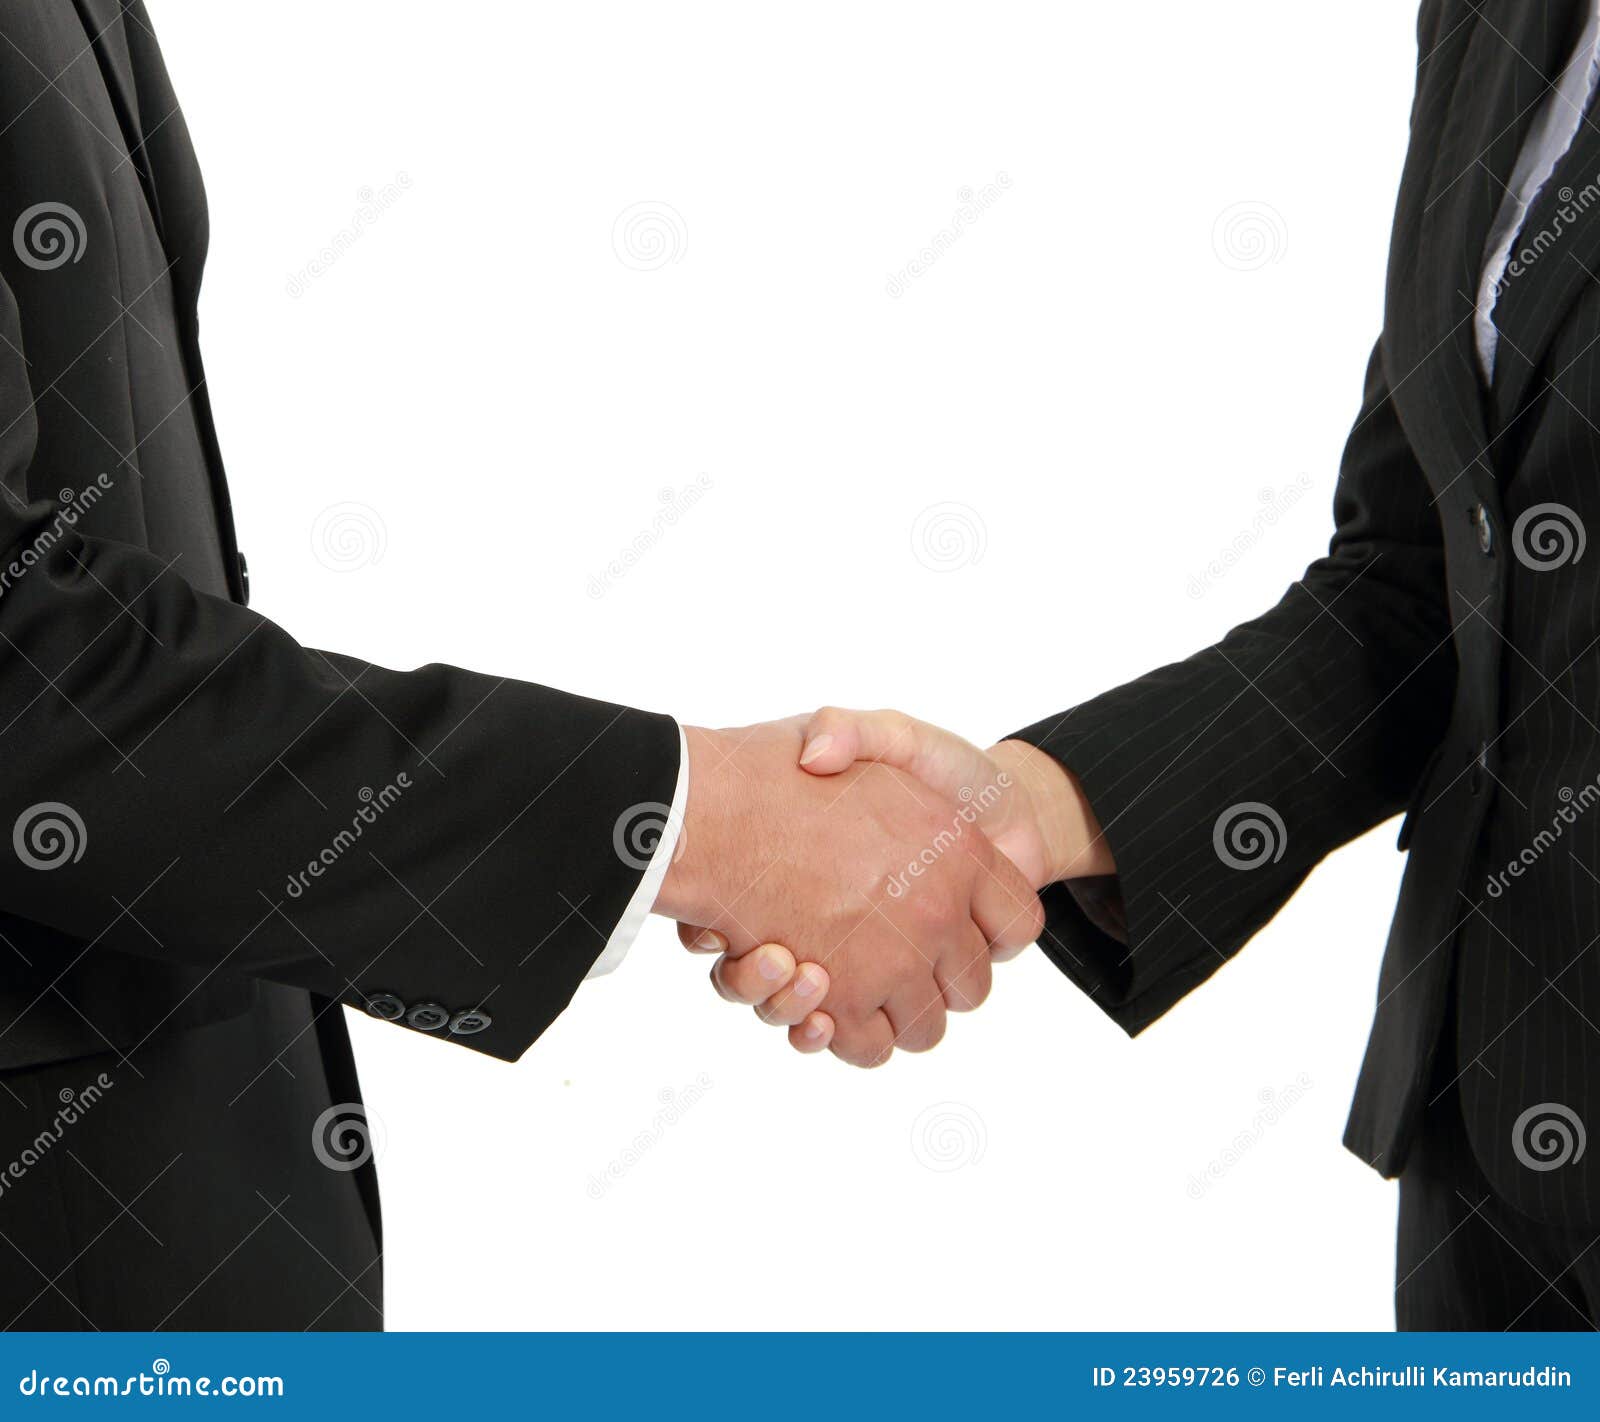 Handshake stock image. Image of handshake, human, women - 11741313